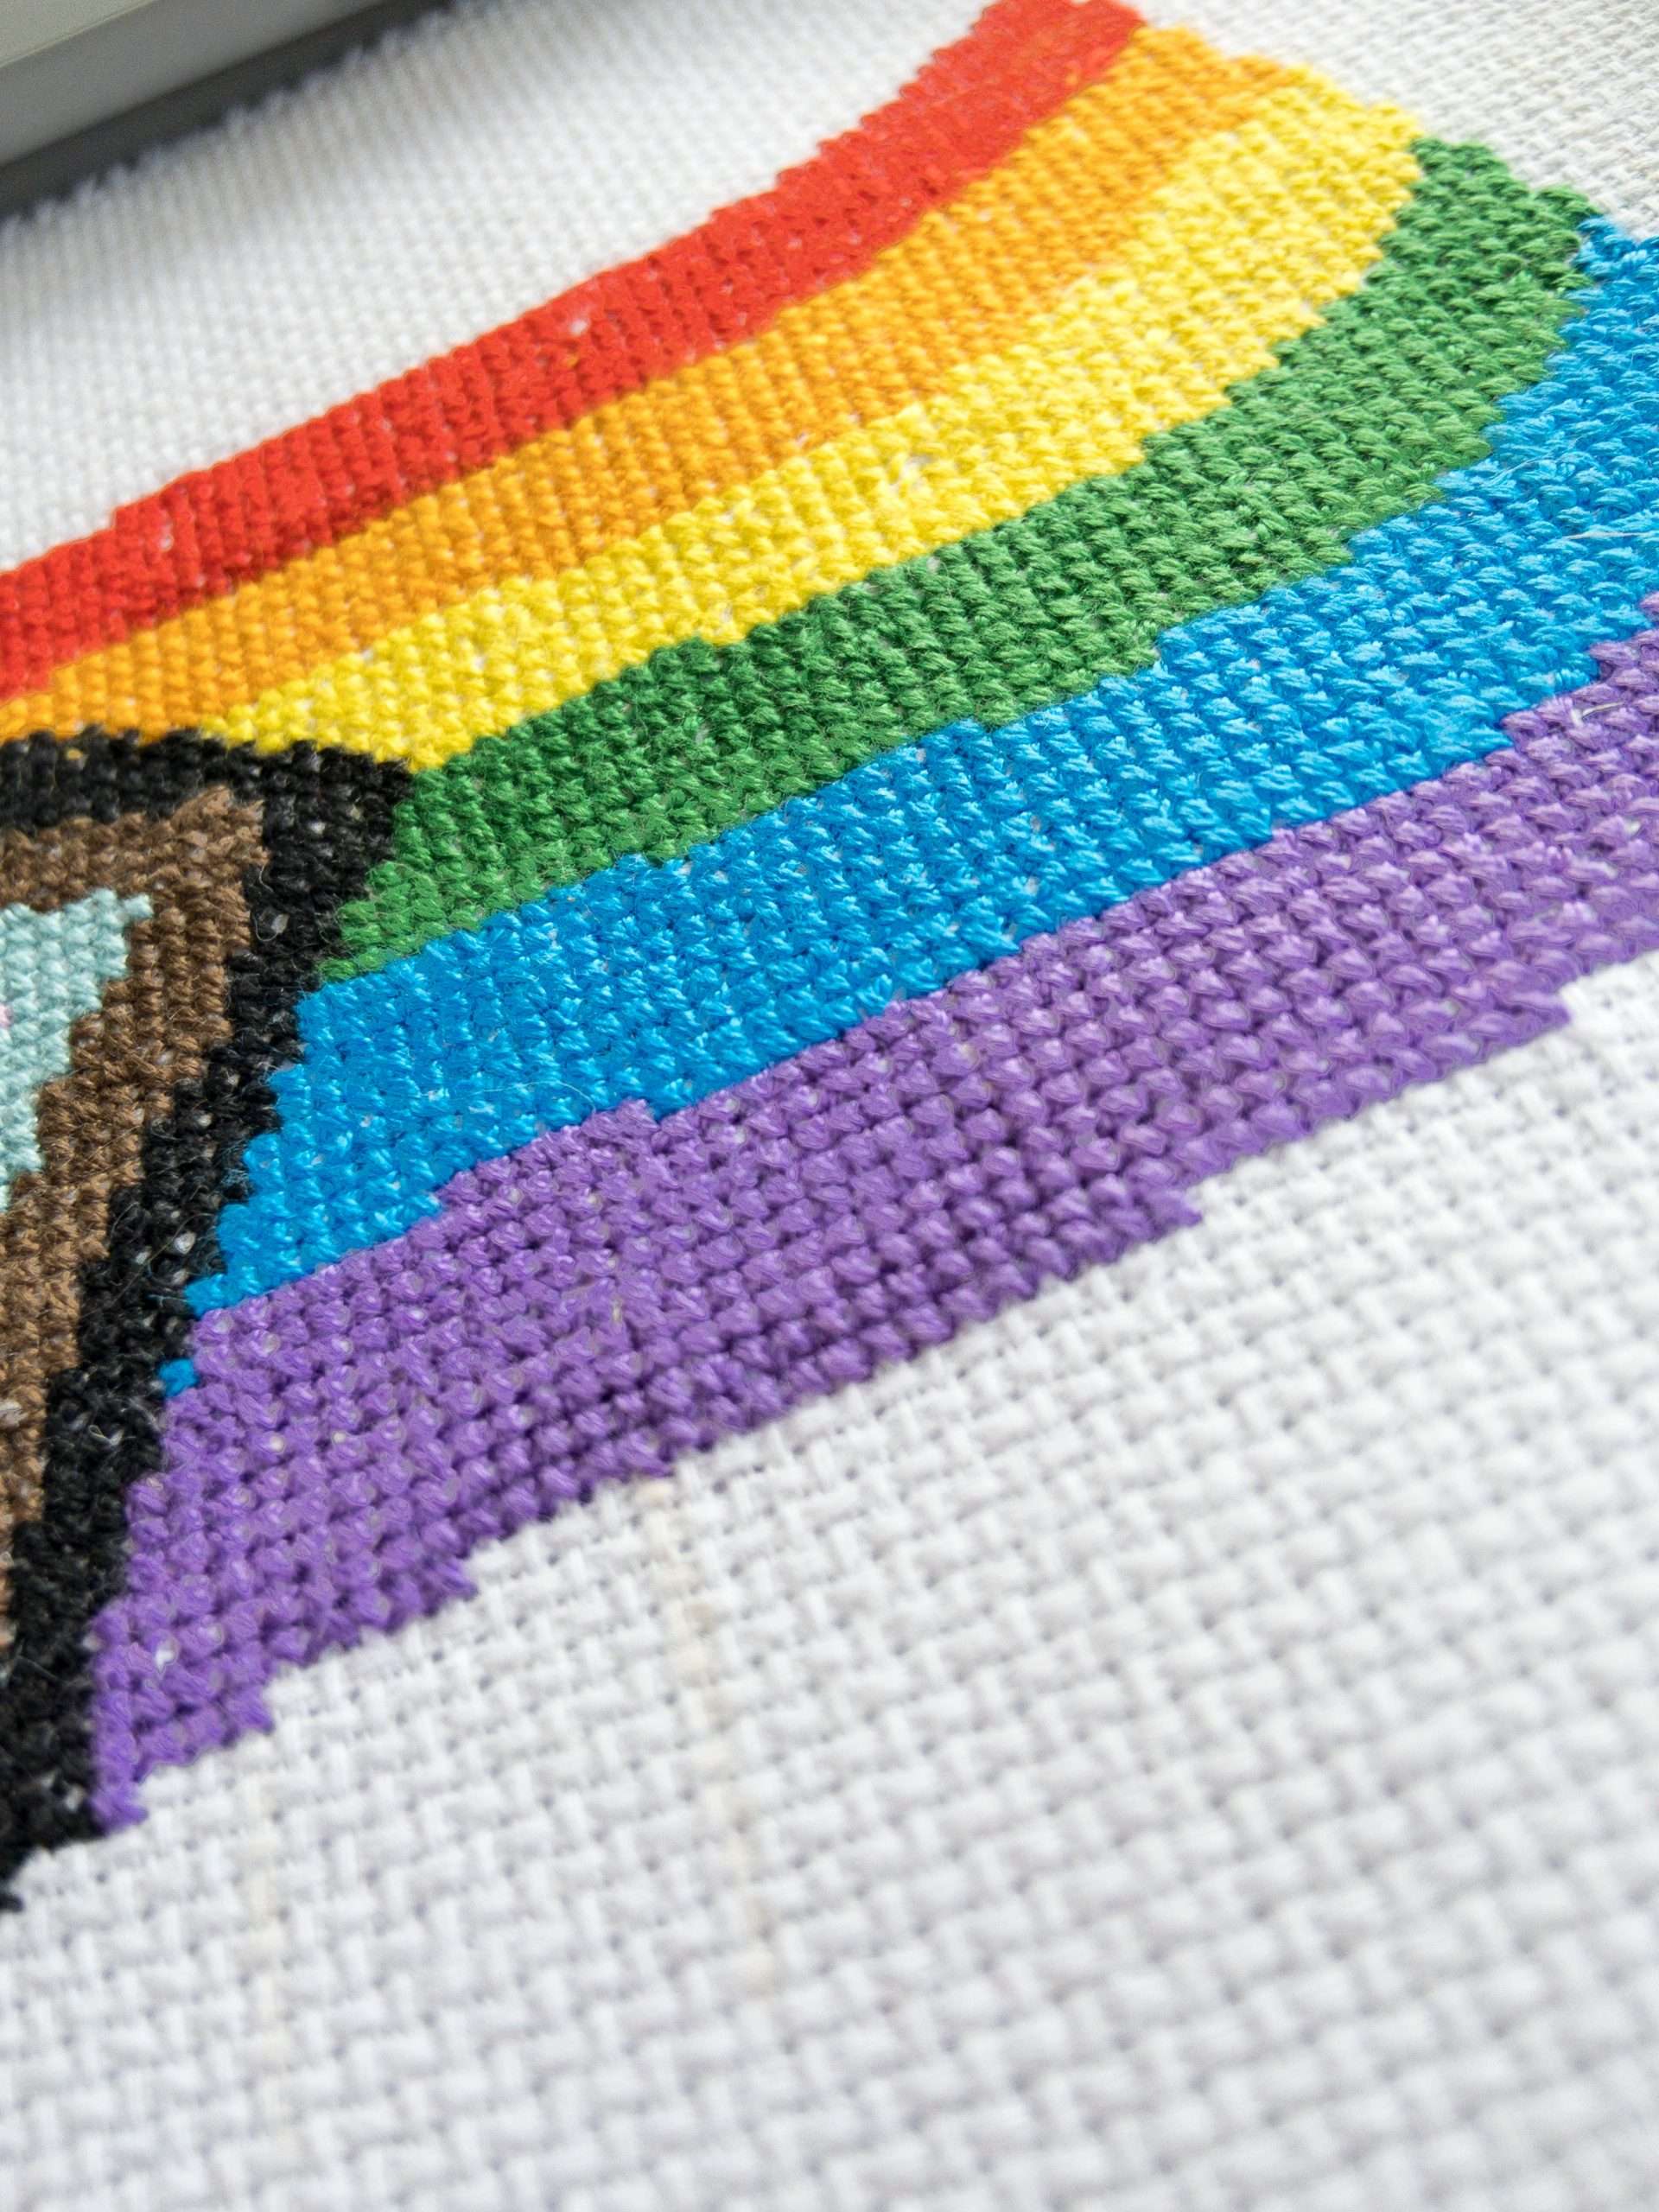 Progress Pride Flag - Cross Stitch Kit And Pattern